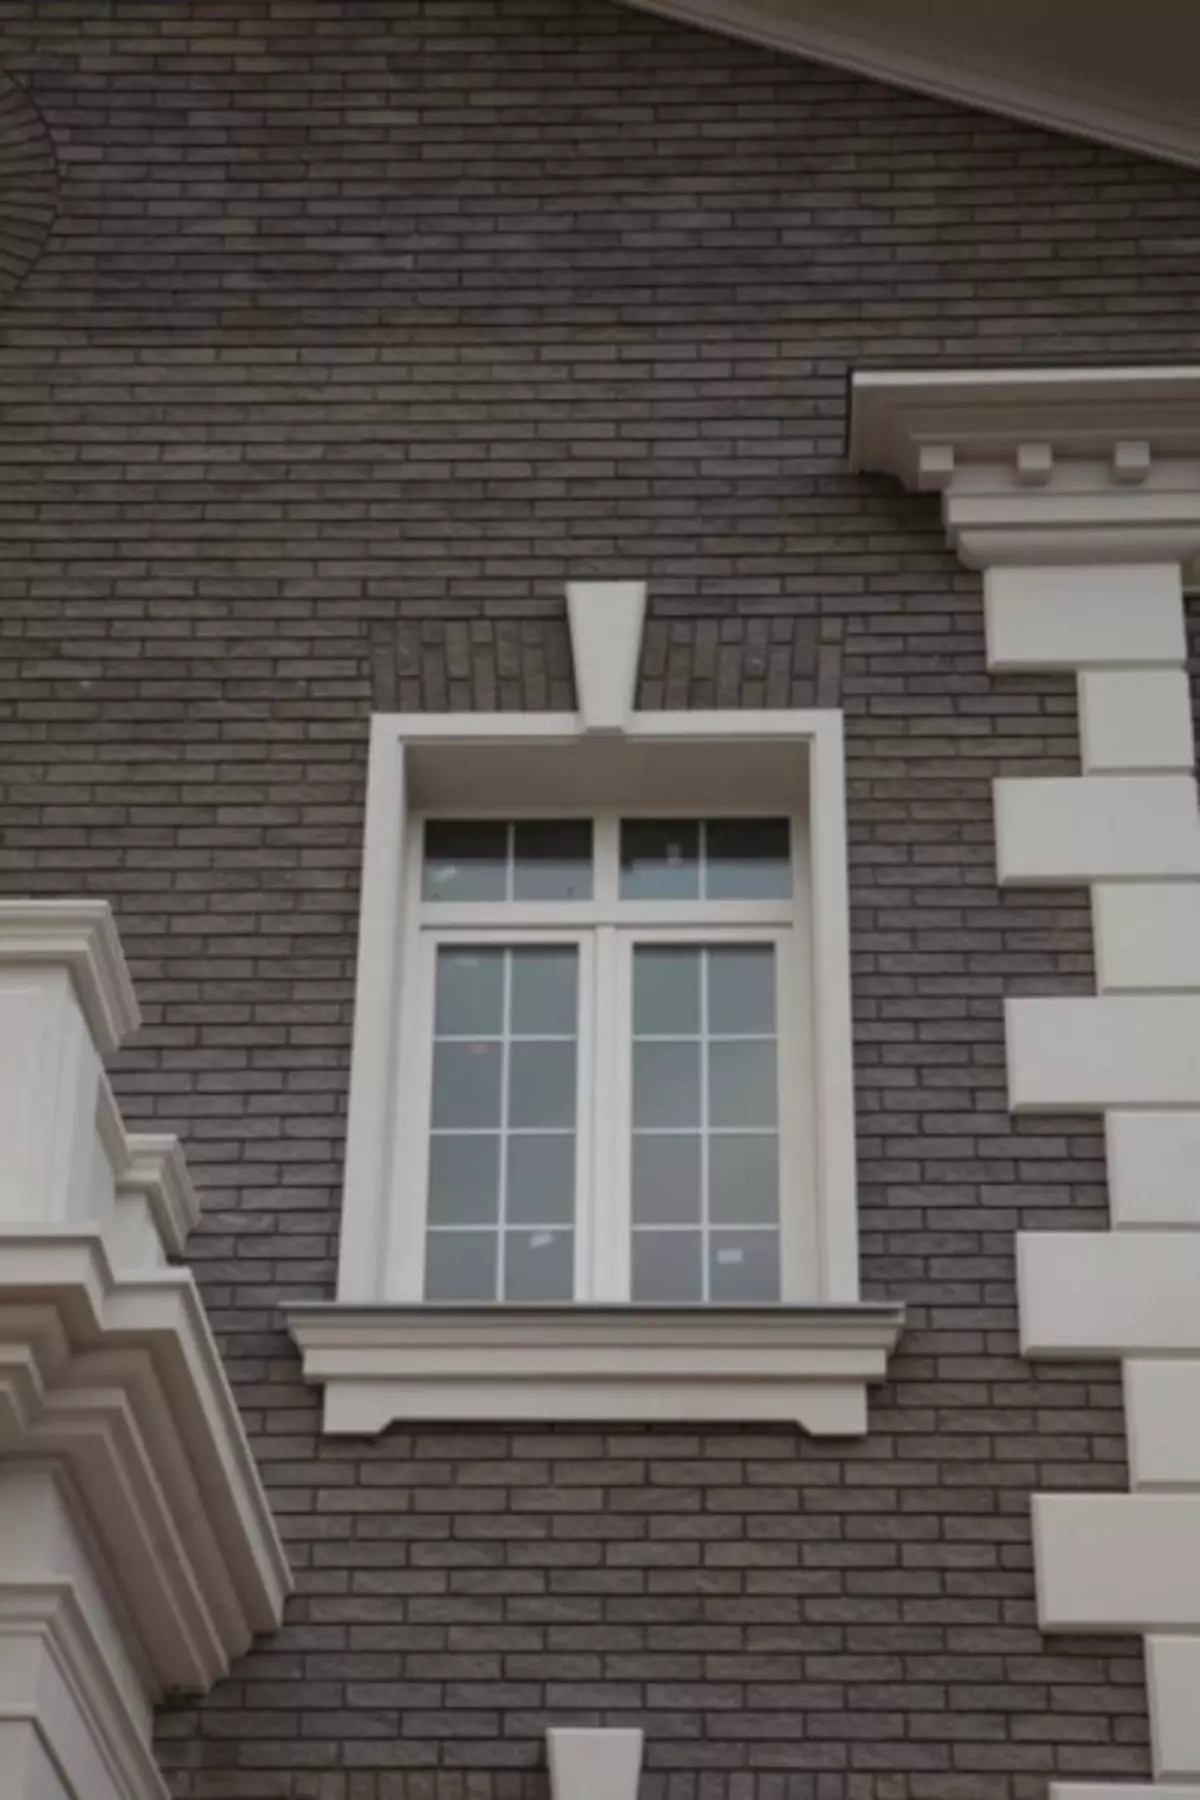 Peringkat terakhir kerja-kerja fasad adalah pembencian tingkap rumah